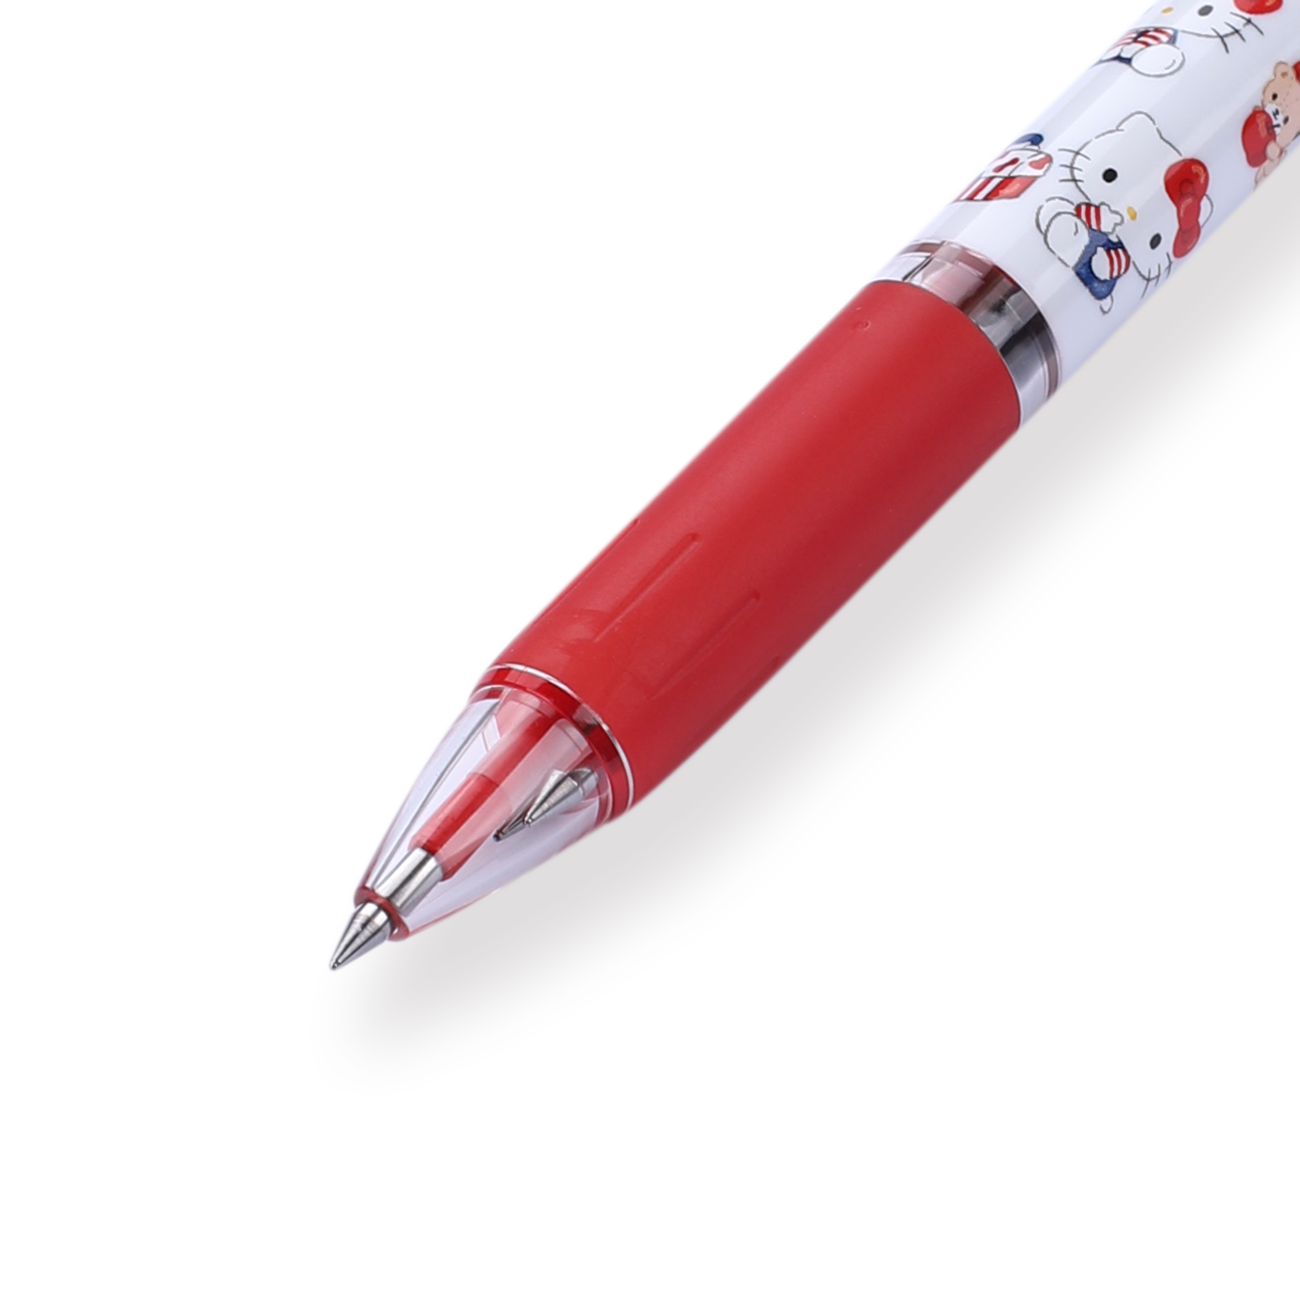 Sanrio Fineliner Pens